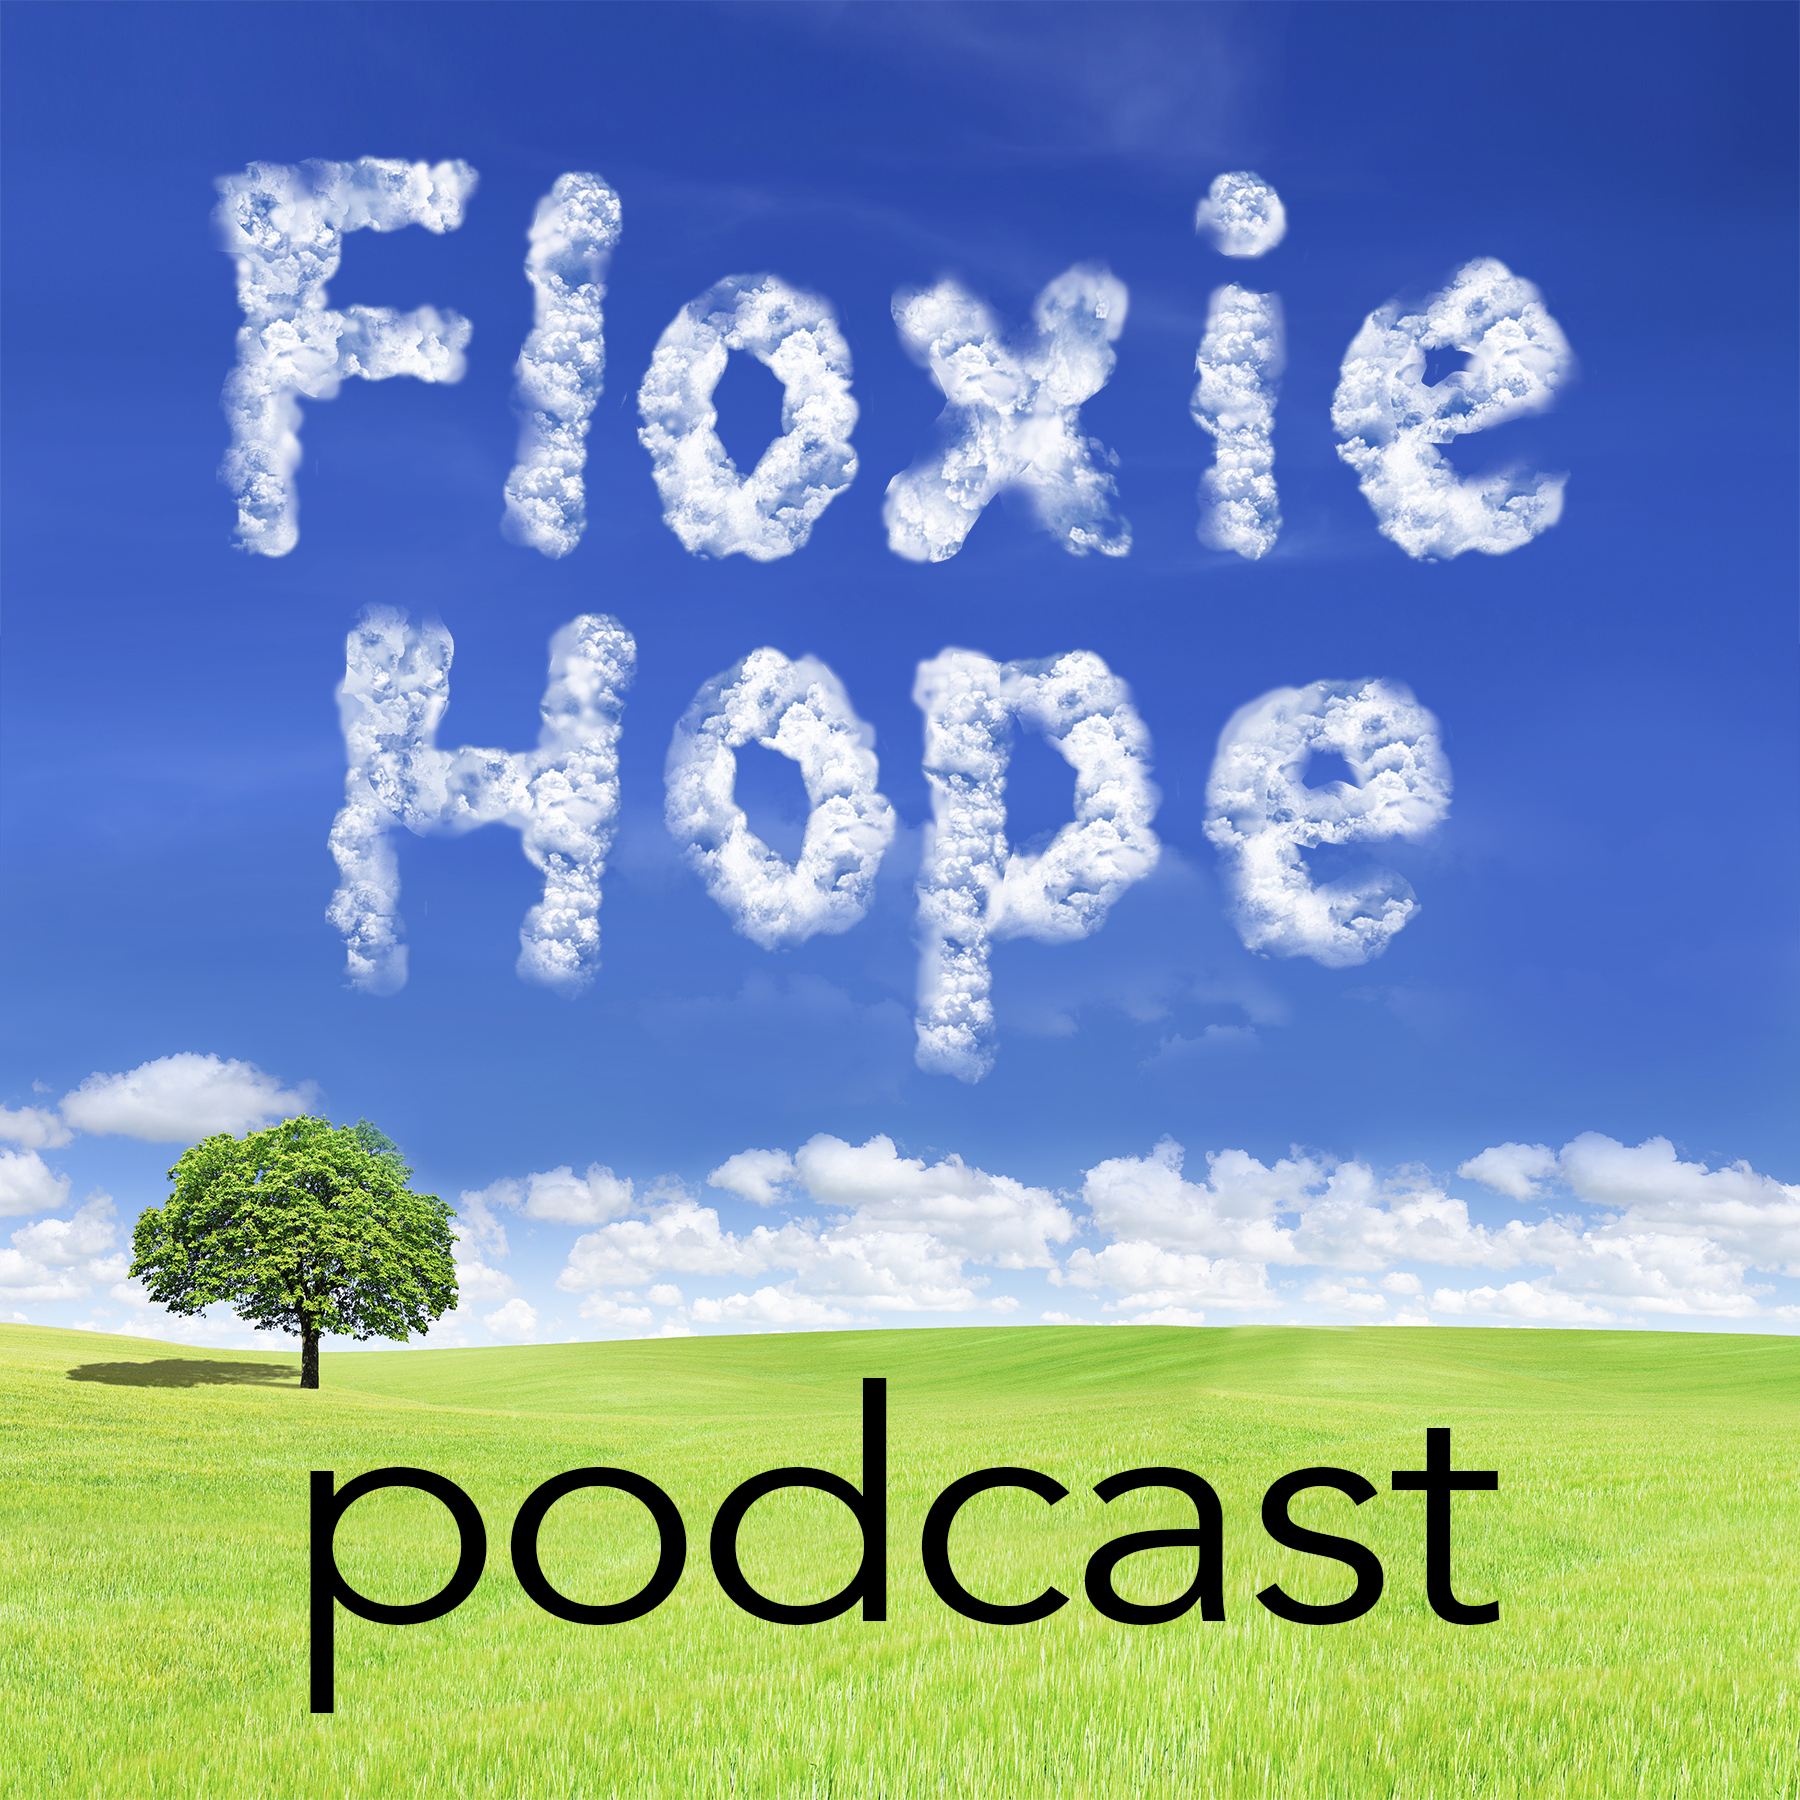 floxie-hope-podcast-1800-72-dpi